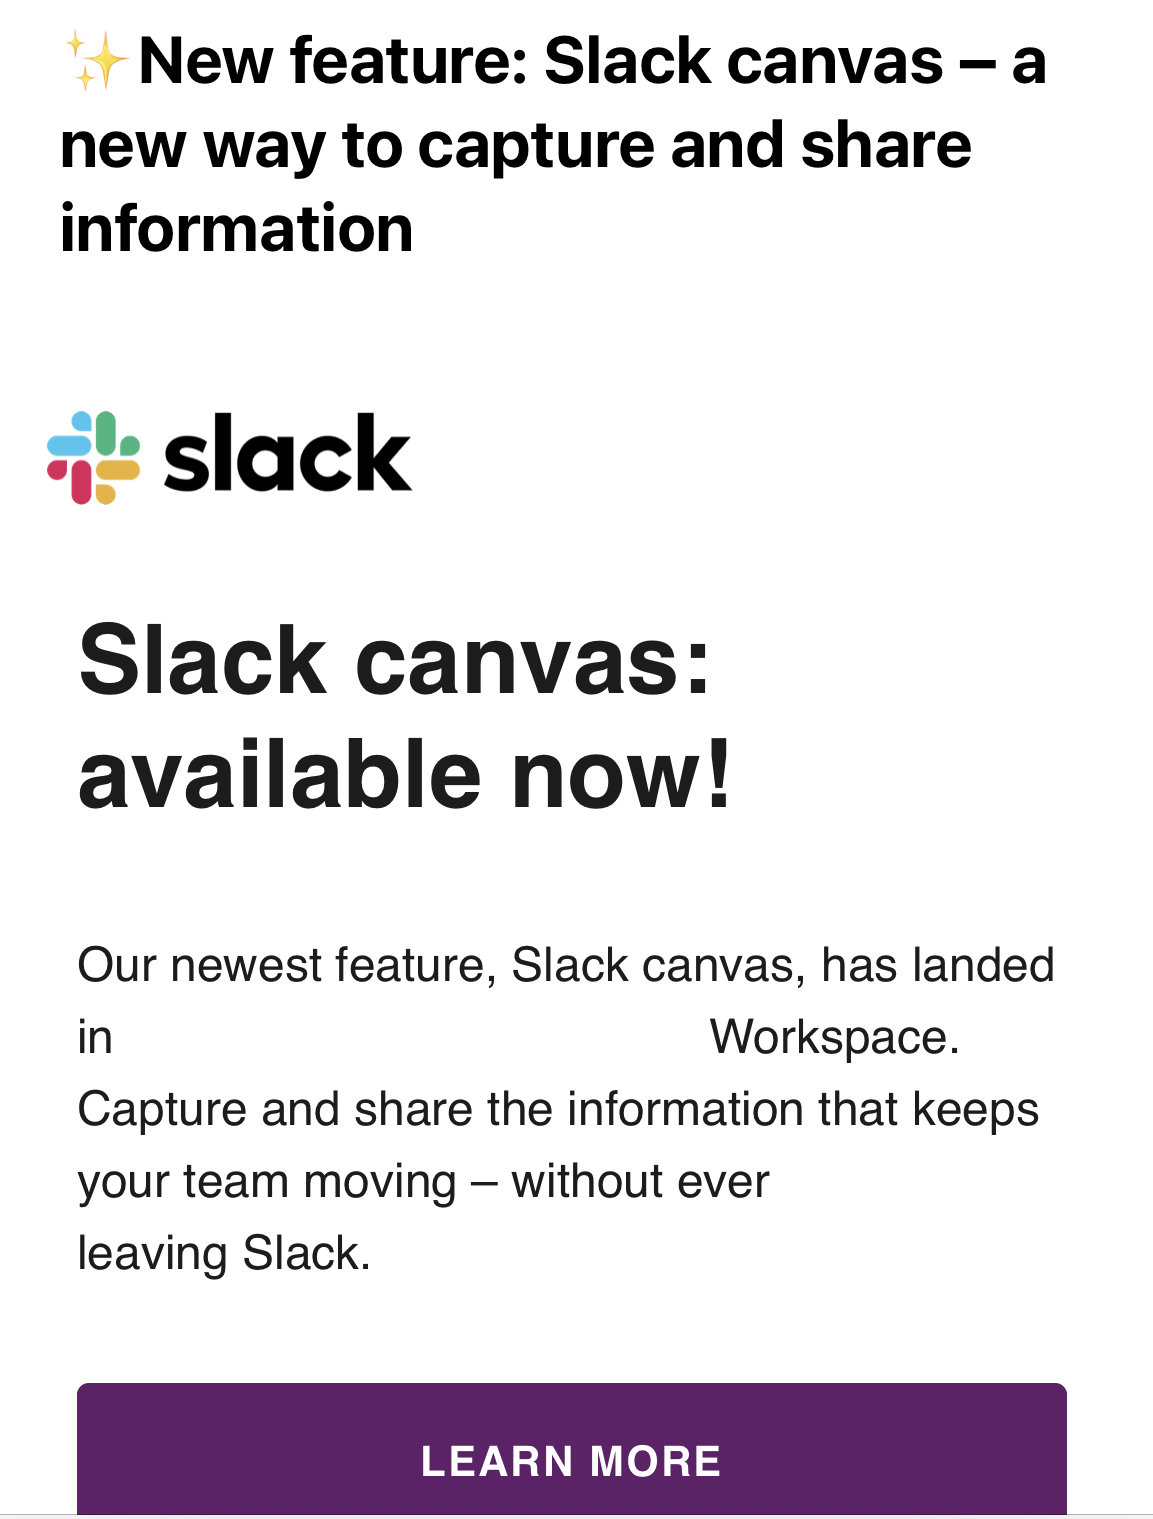 Slack email software marketing example